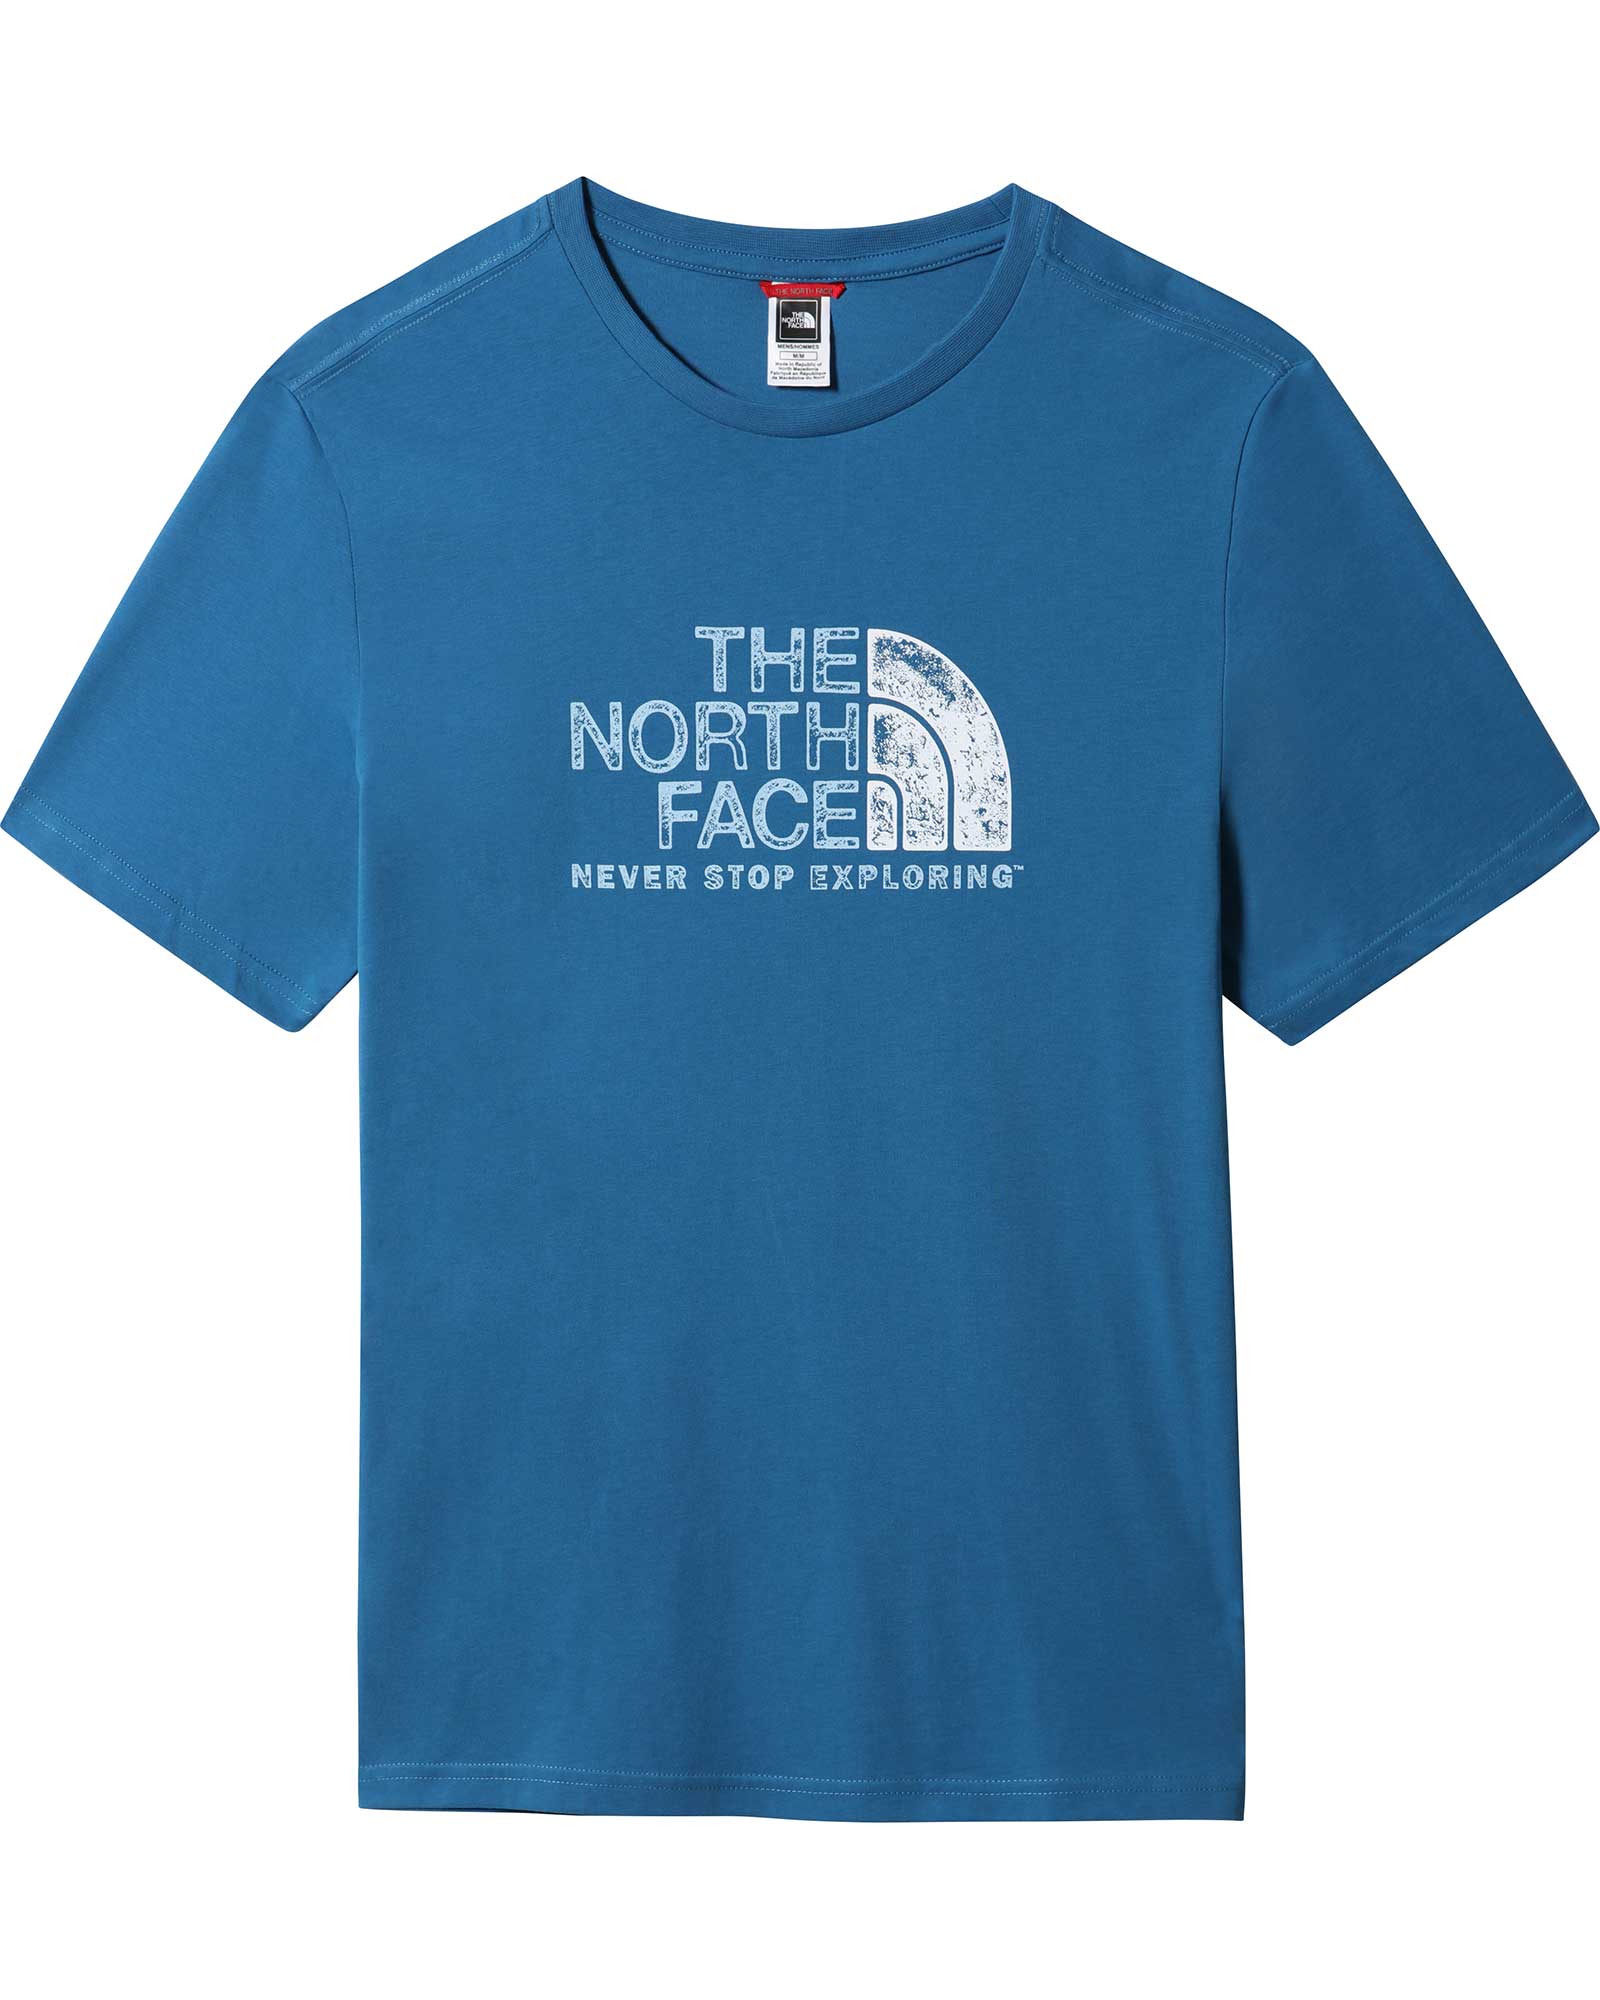 The North Face Rust Men’s T Shirt - Banff Blue S